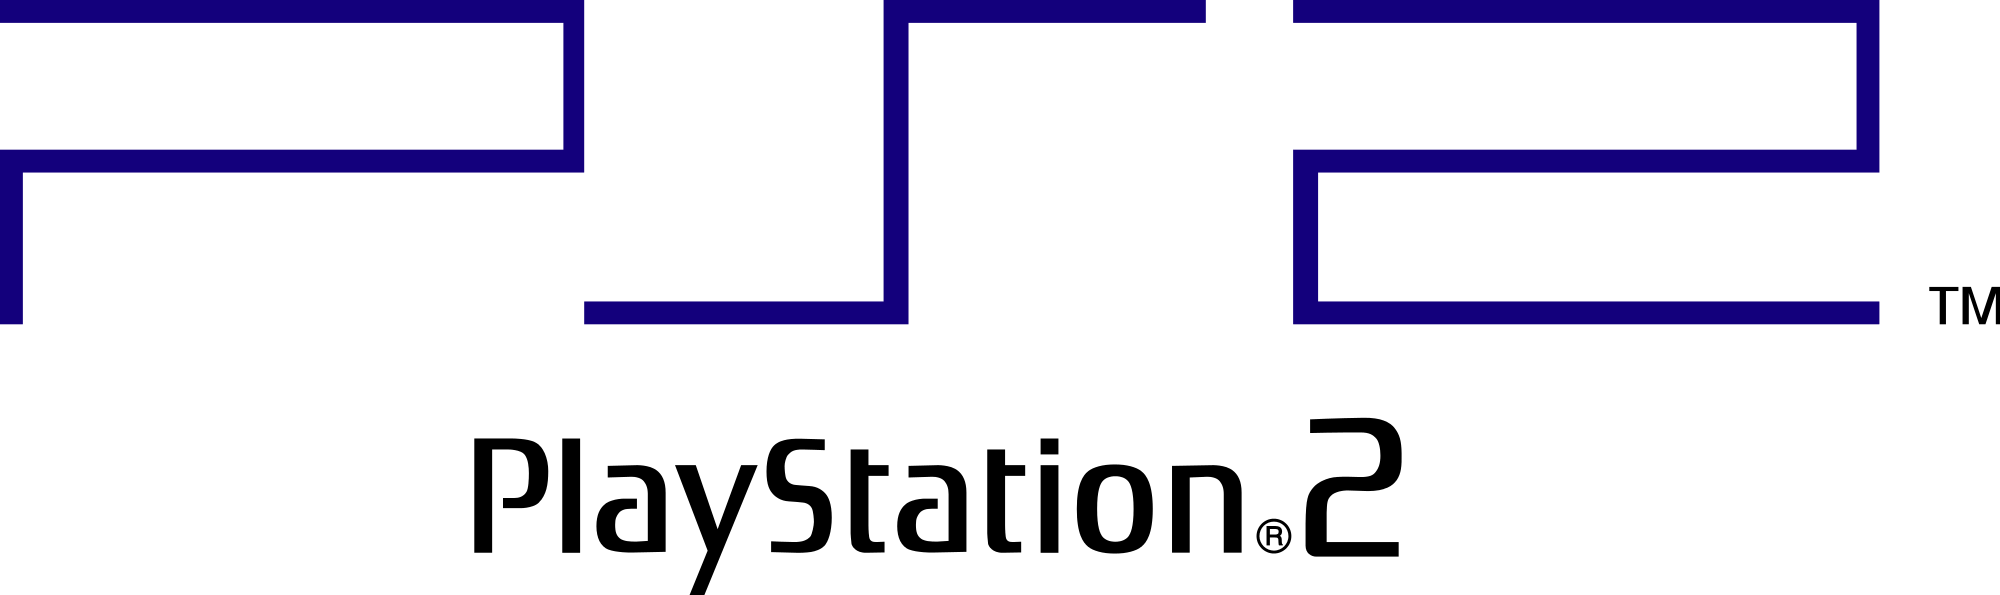 PlayStation 2 Logo - File:PlayStation 2 logo.svg - Wikimedia Commons